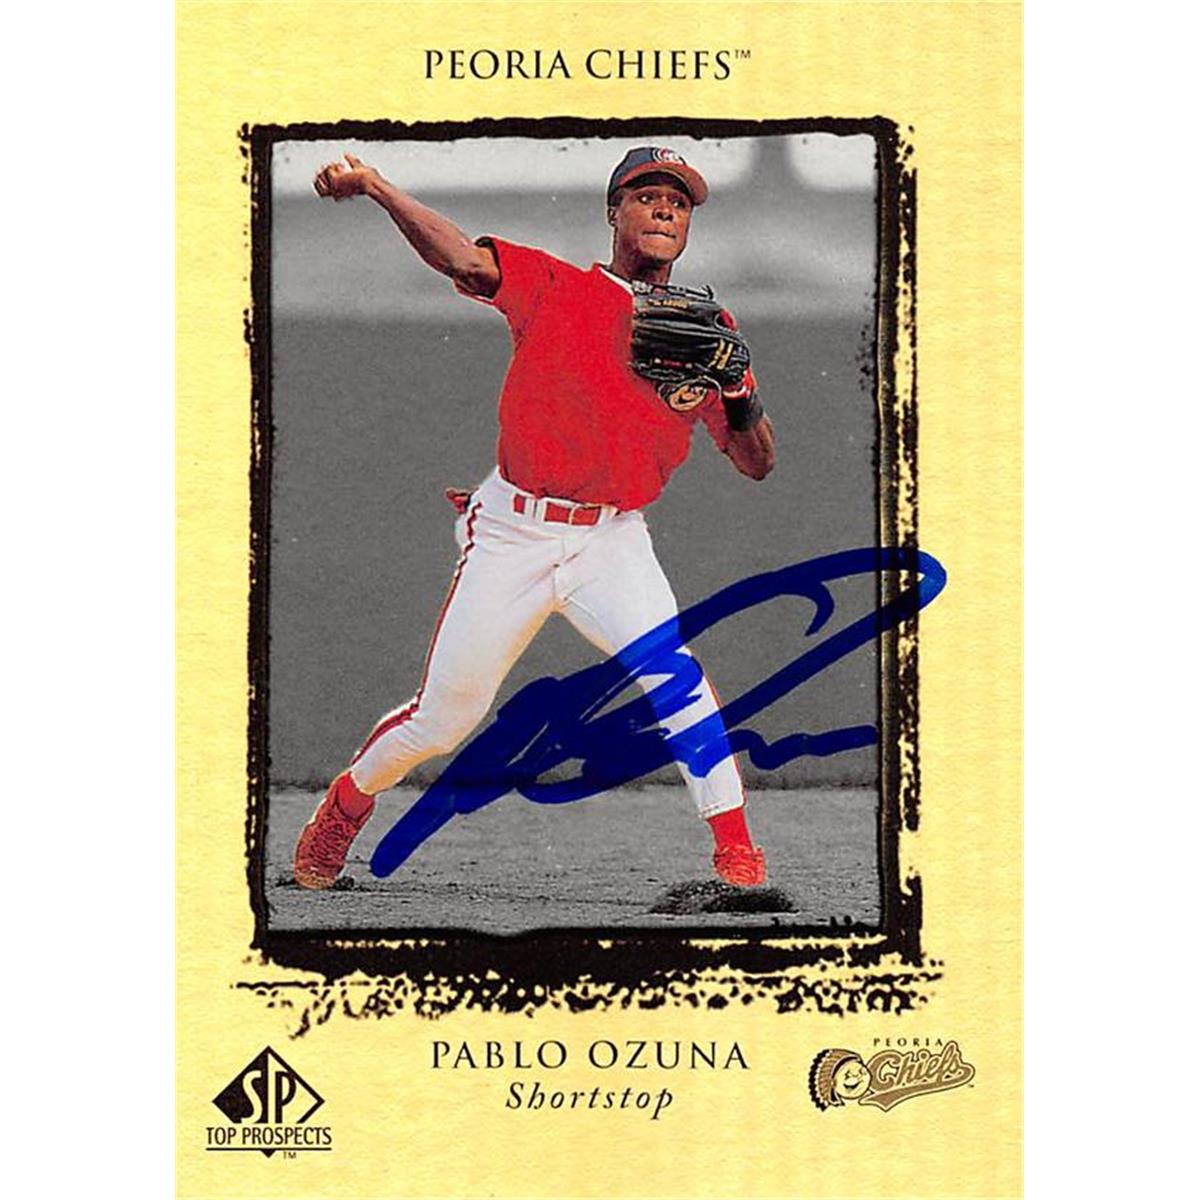 465820 Pablo Ozuna Autographed Baseball Card, Peoria Chiefs - 1999 Upper Deck Top Prospects Rookie No.95 -  Autograph Warehouse